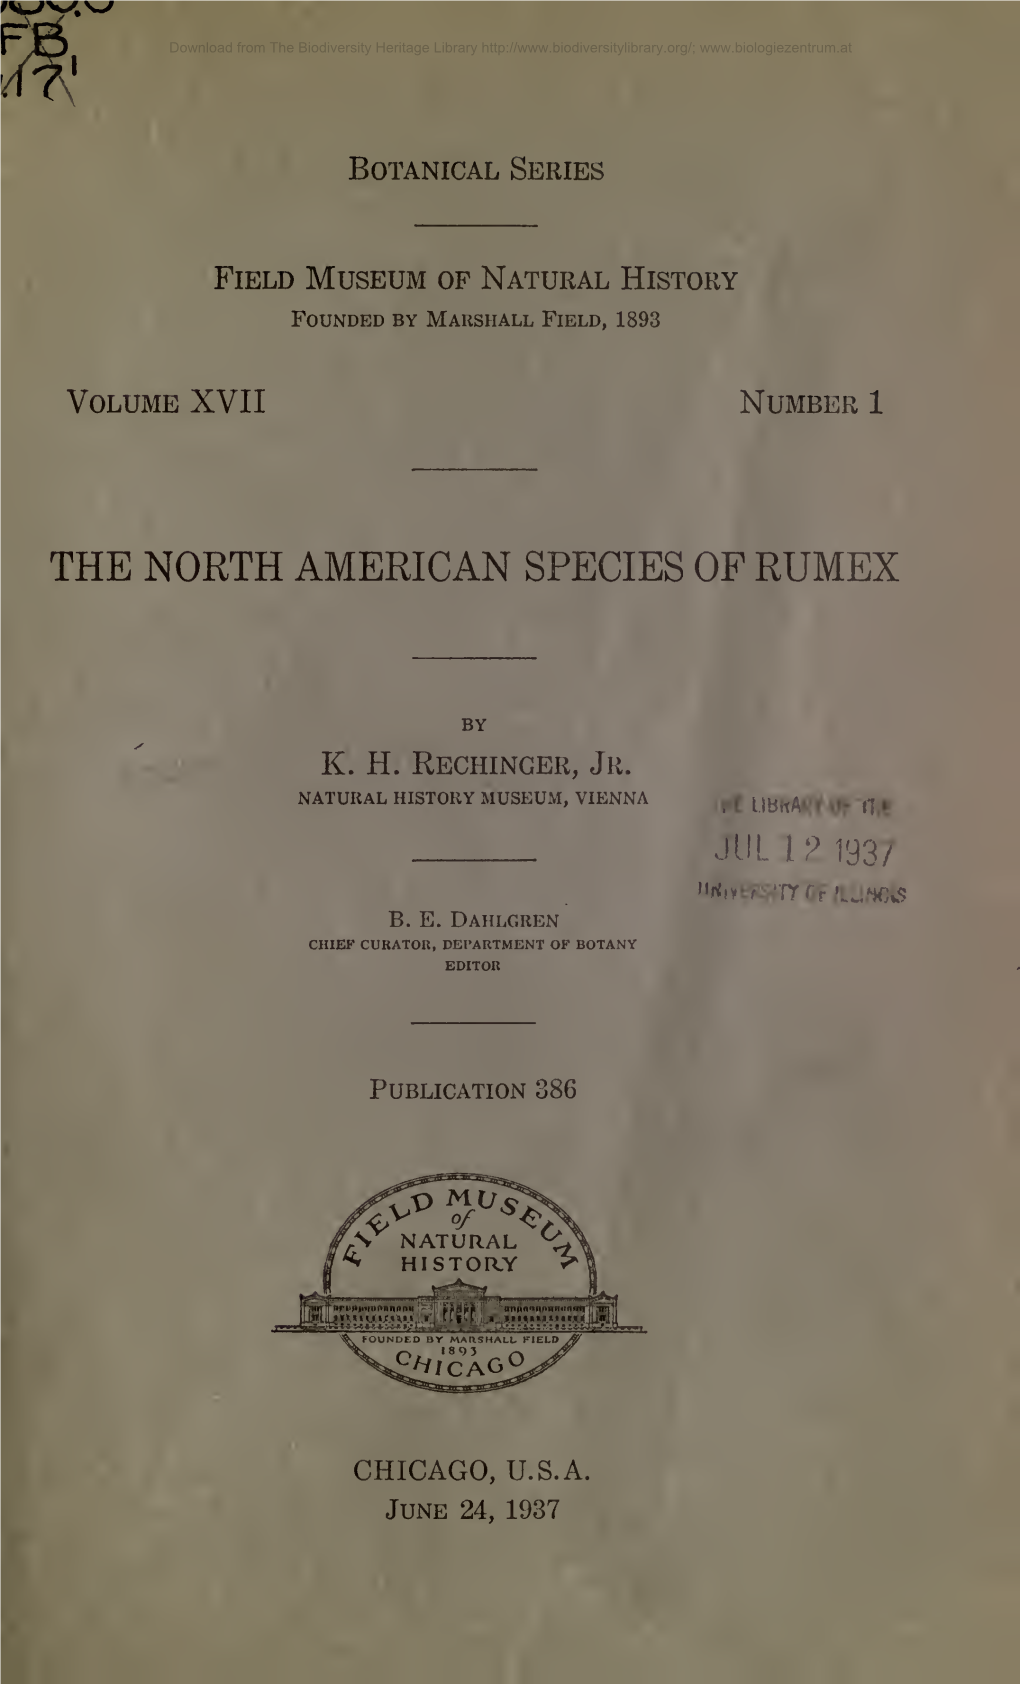 The North American Species of Rumex